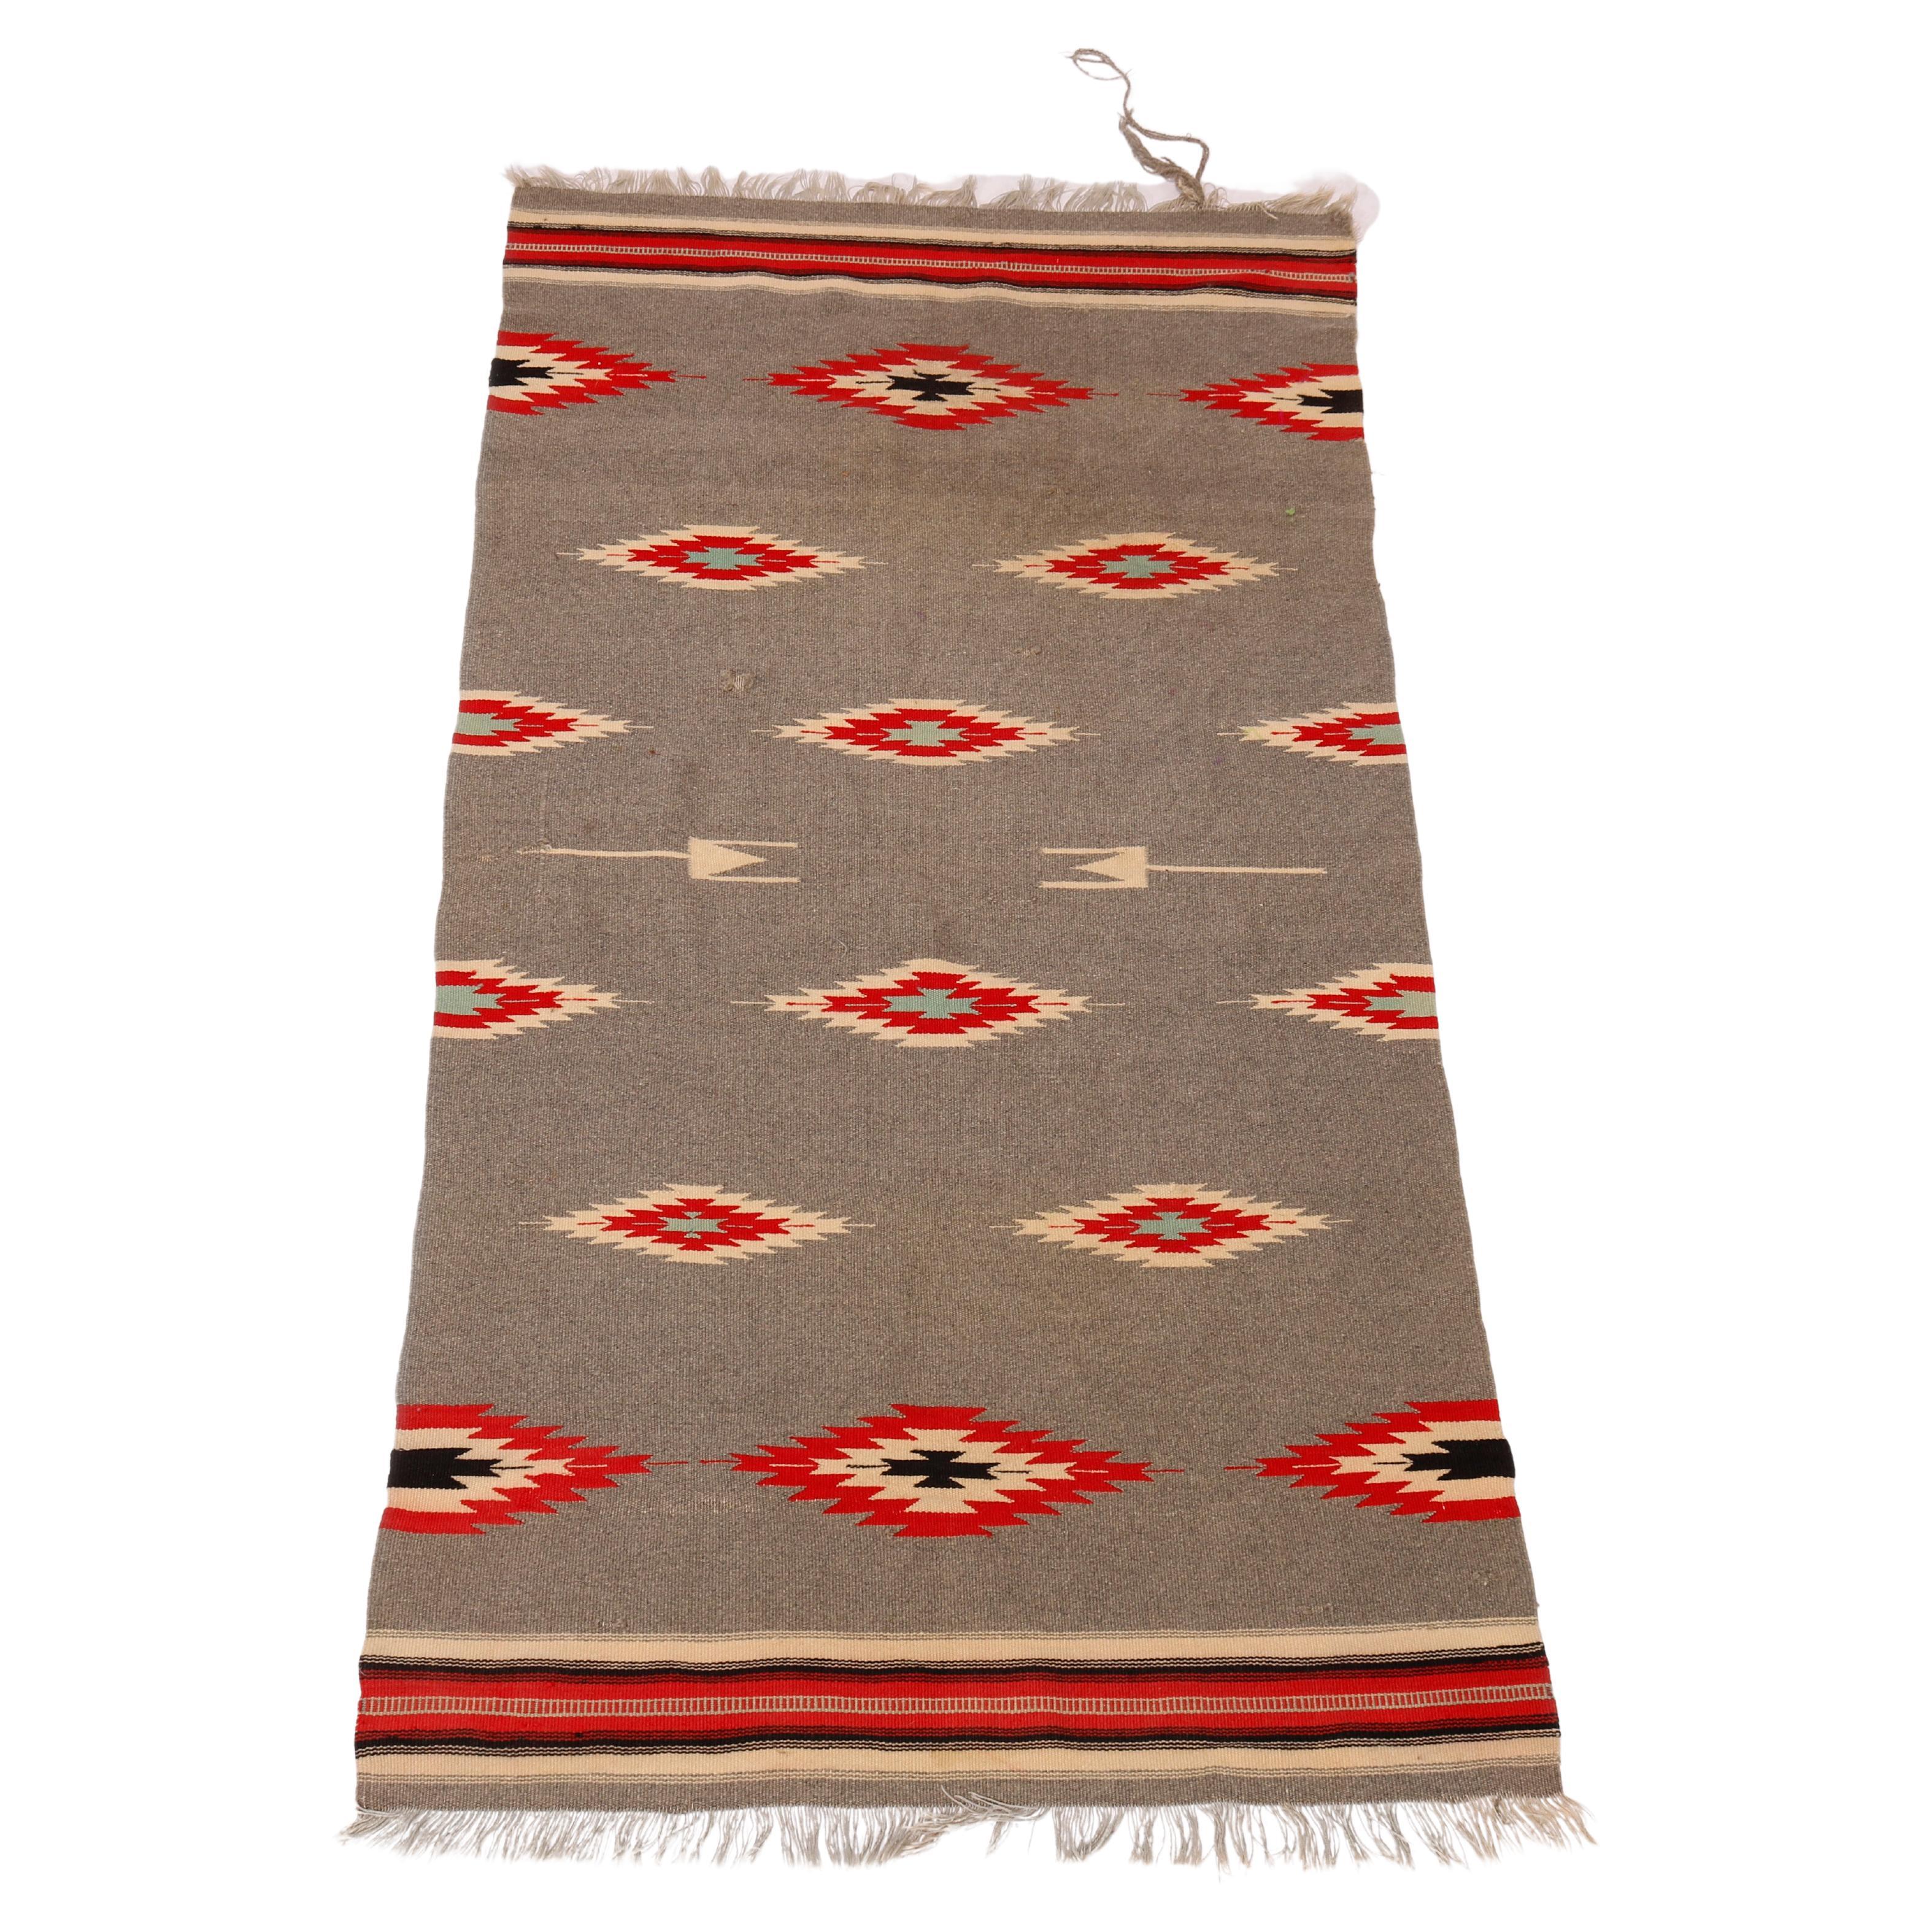 Southwestern American Indian Navajo Hand Woven Wool Rug, Diamond Pattern, c1920